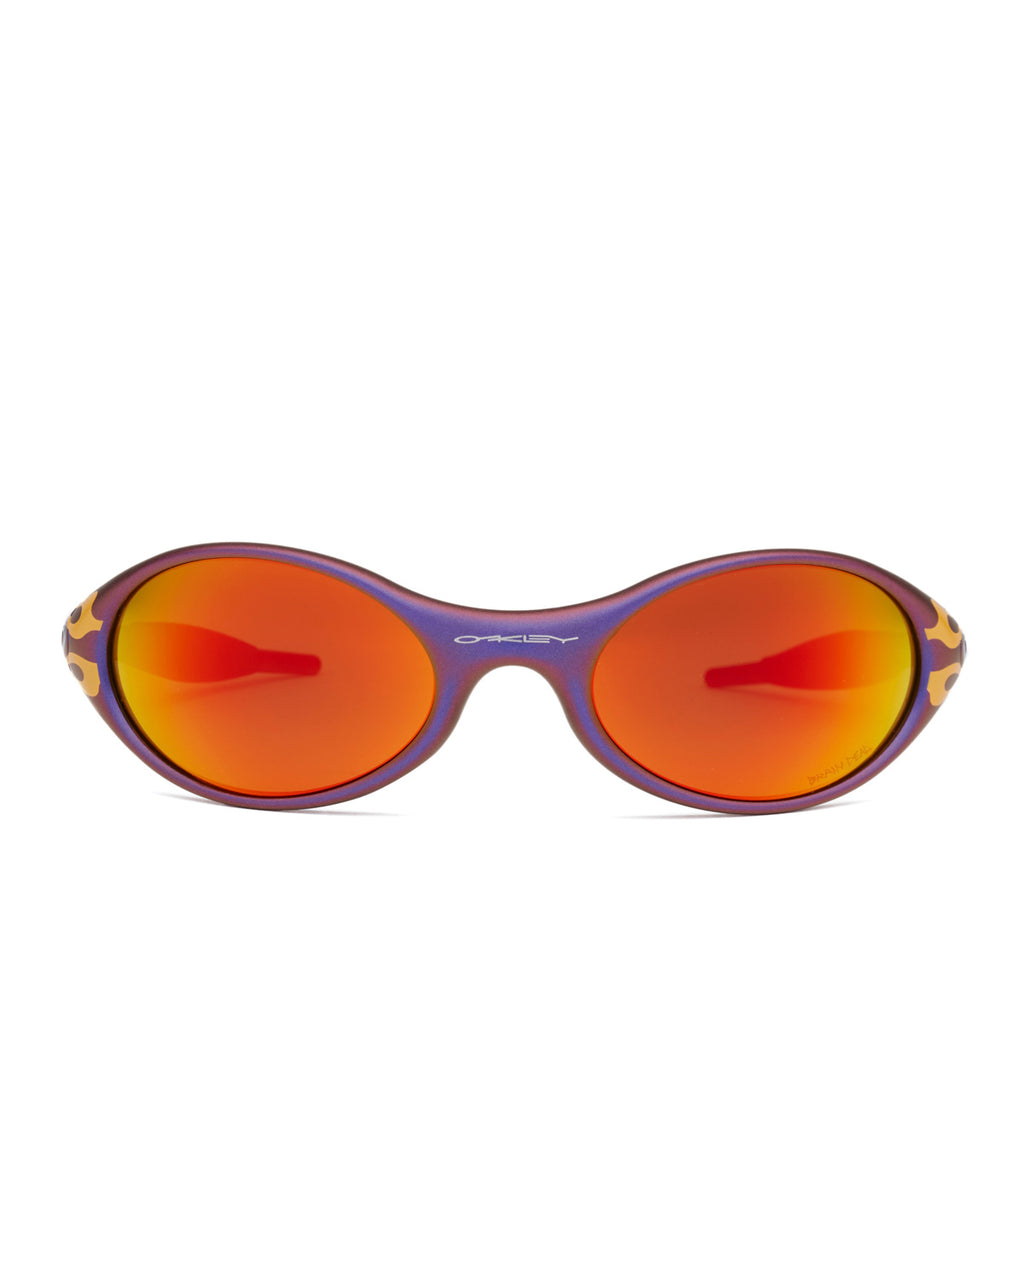 Oakley® Official Store: Sunglasses, Goggles & Apparel